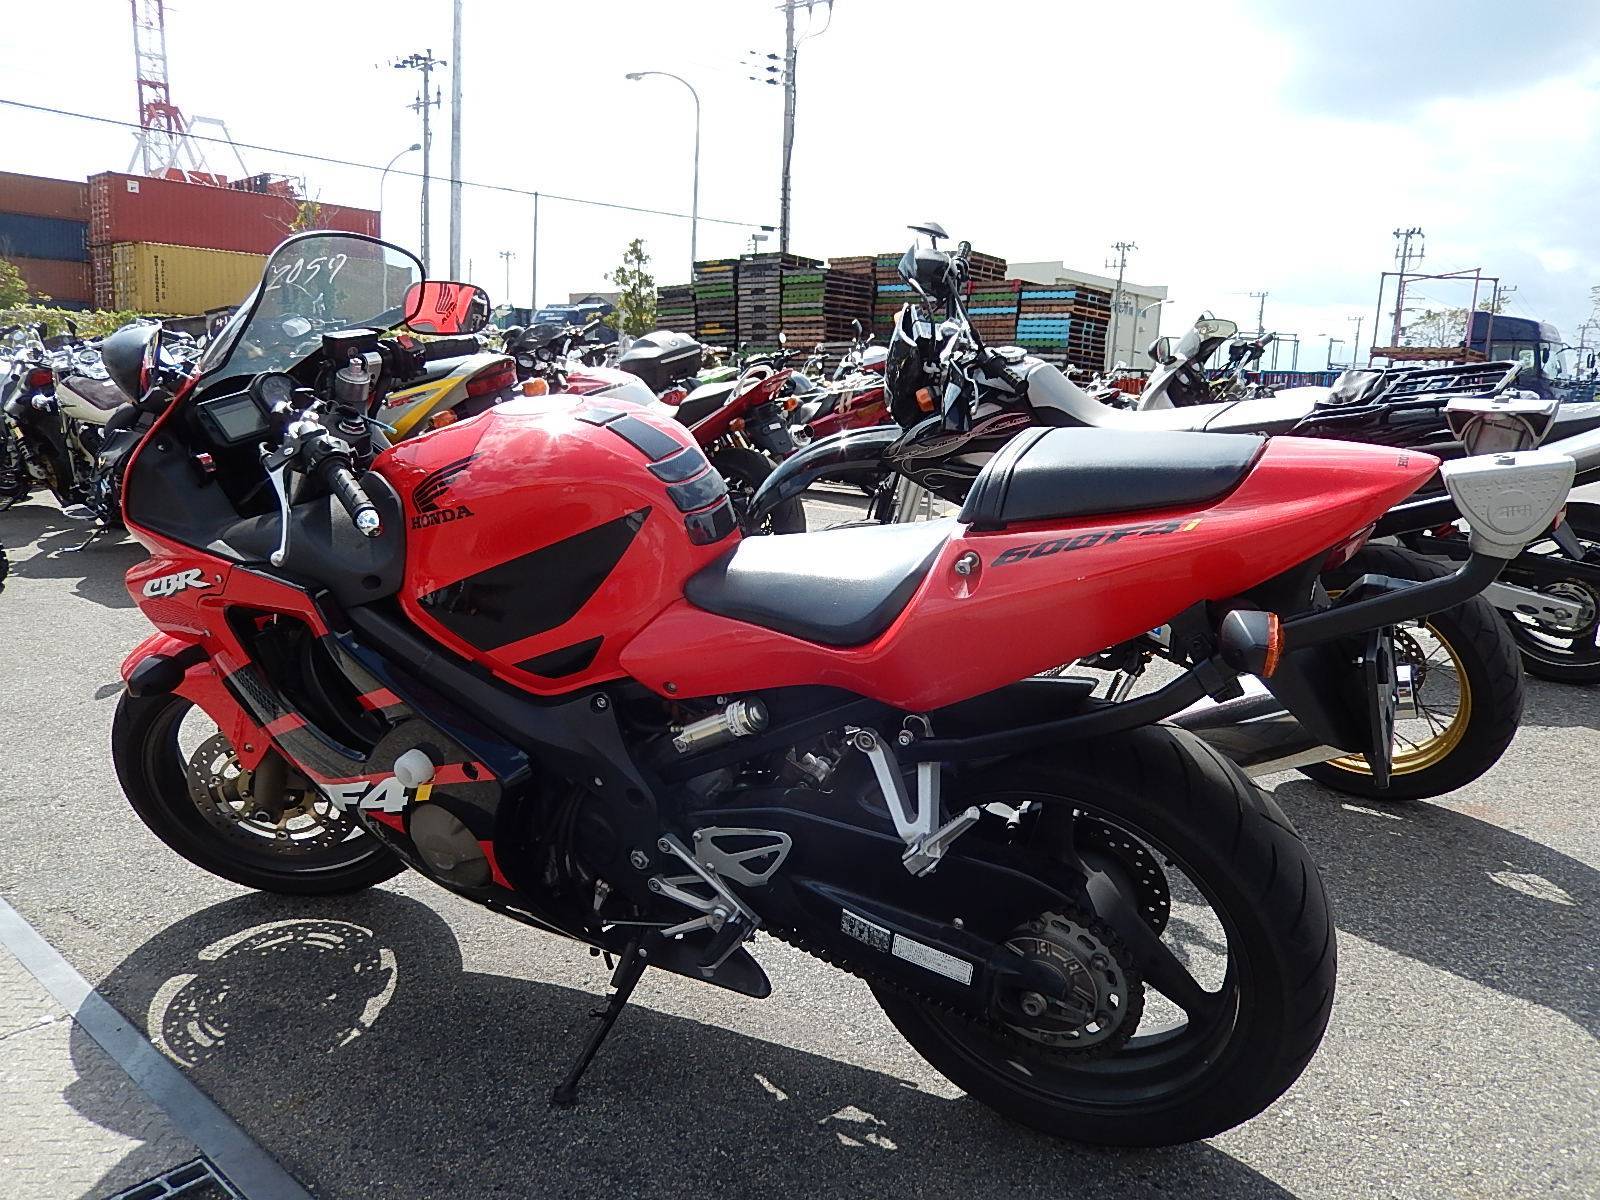 Мотоцикл honda cbr 600 rr: характеристика, фото, видео, отзывы